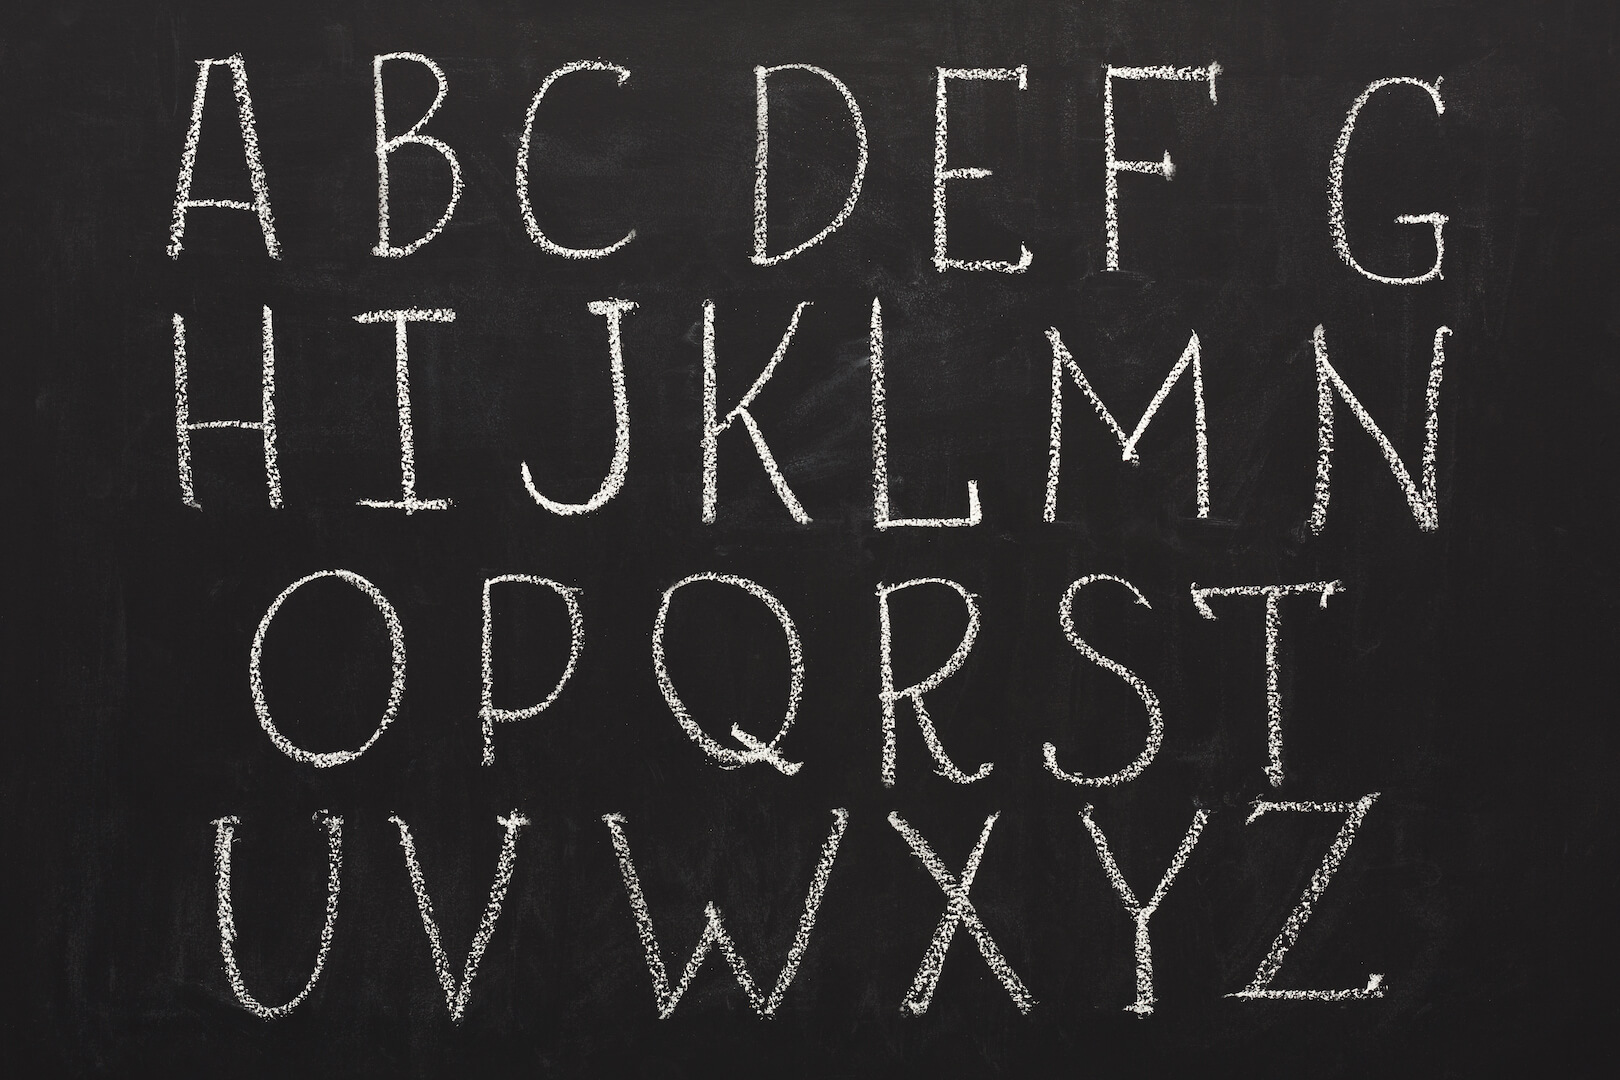 english-abc-written-by-chalk-on-blackboard-2022-12-16-08-40-42-utc-copy-2